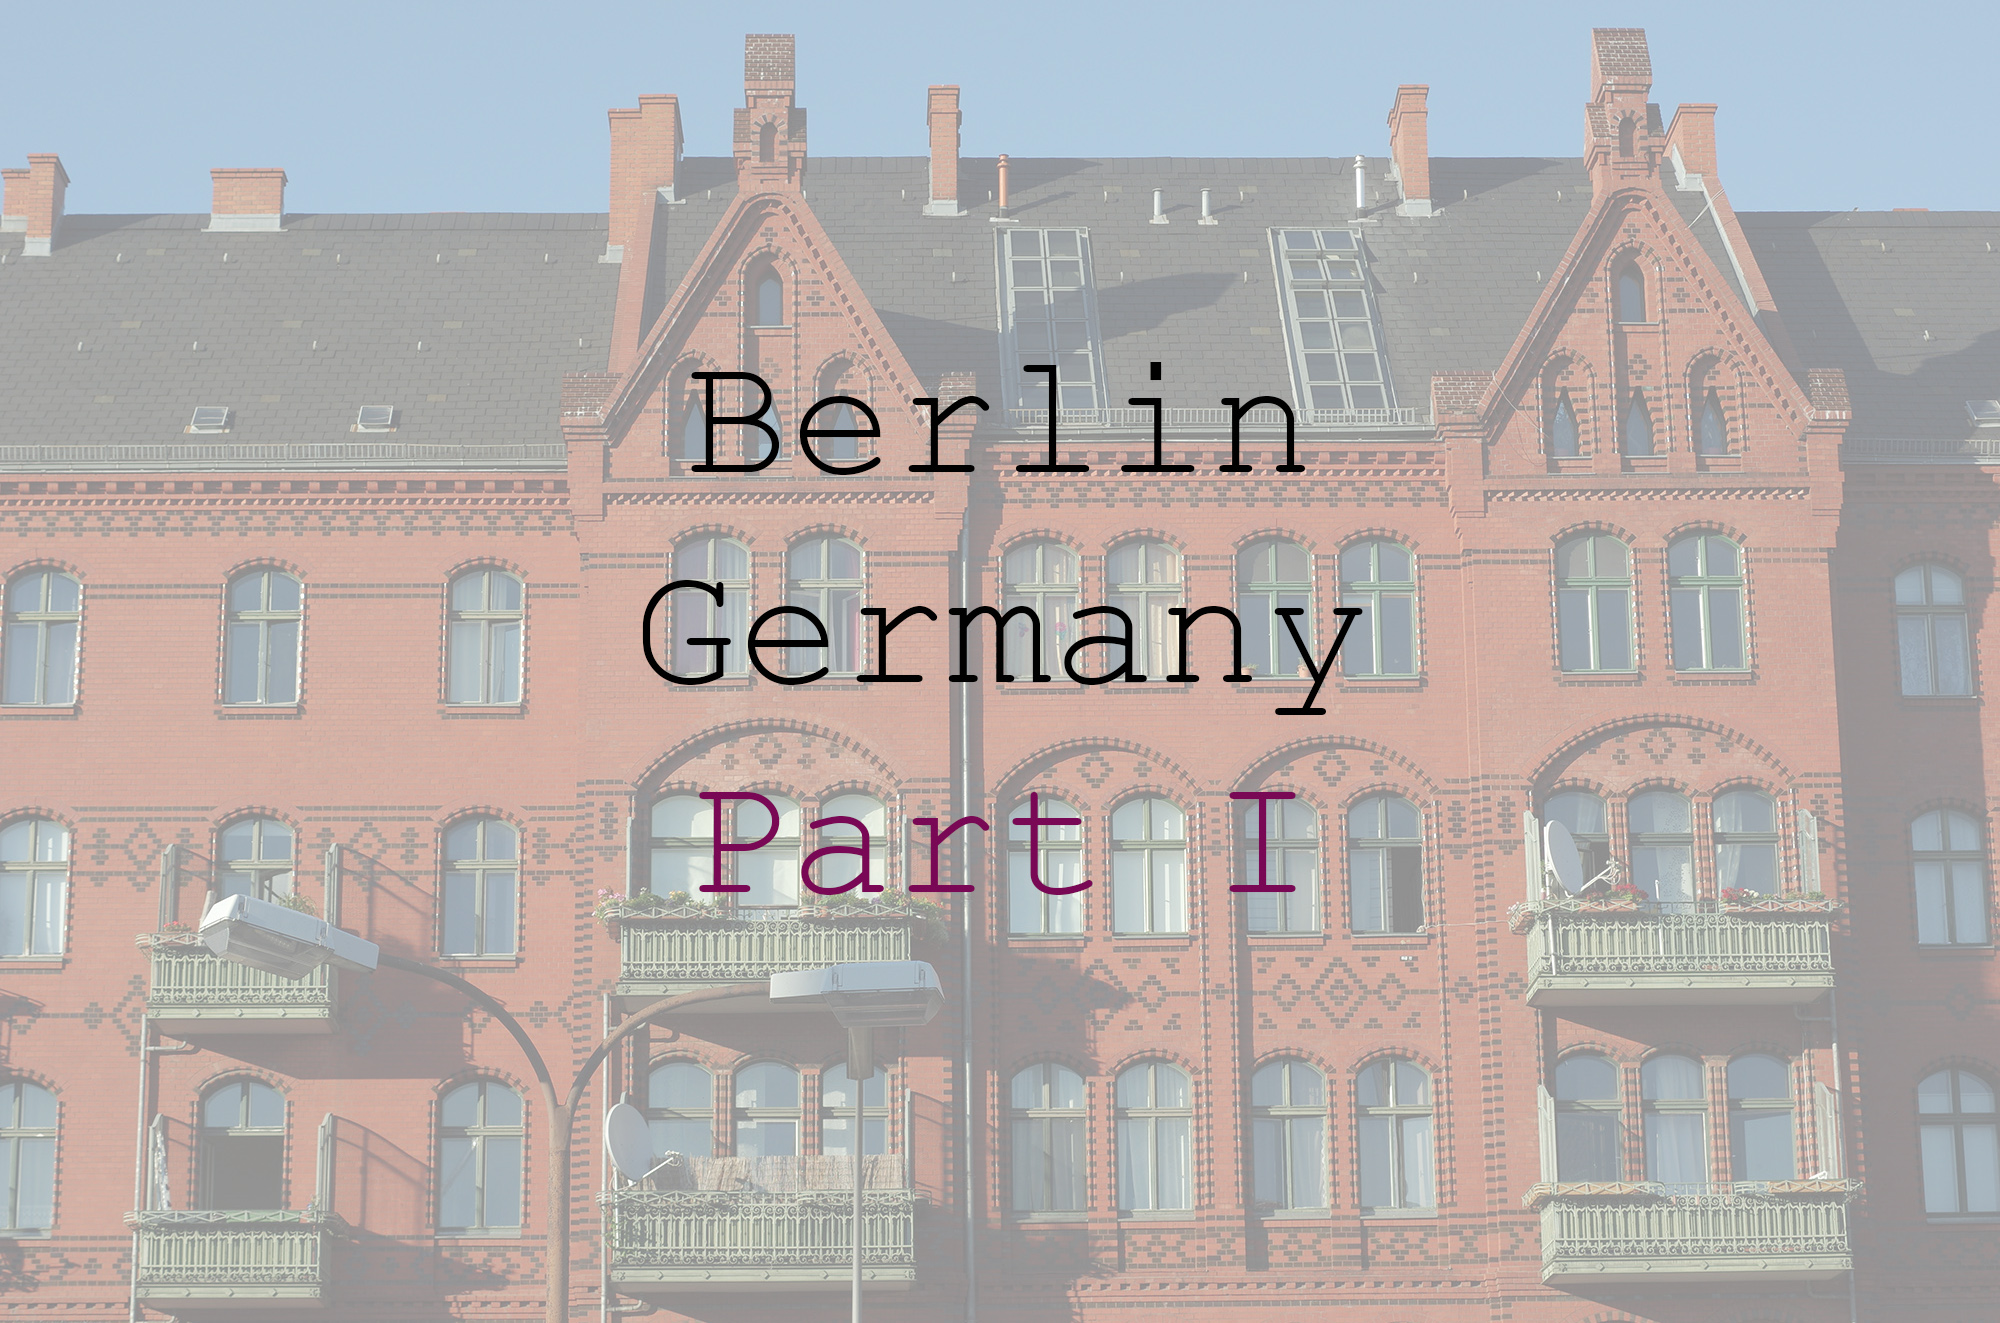 Berlin city guide